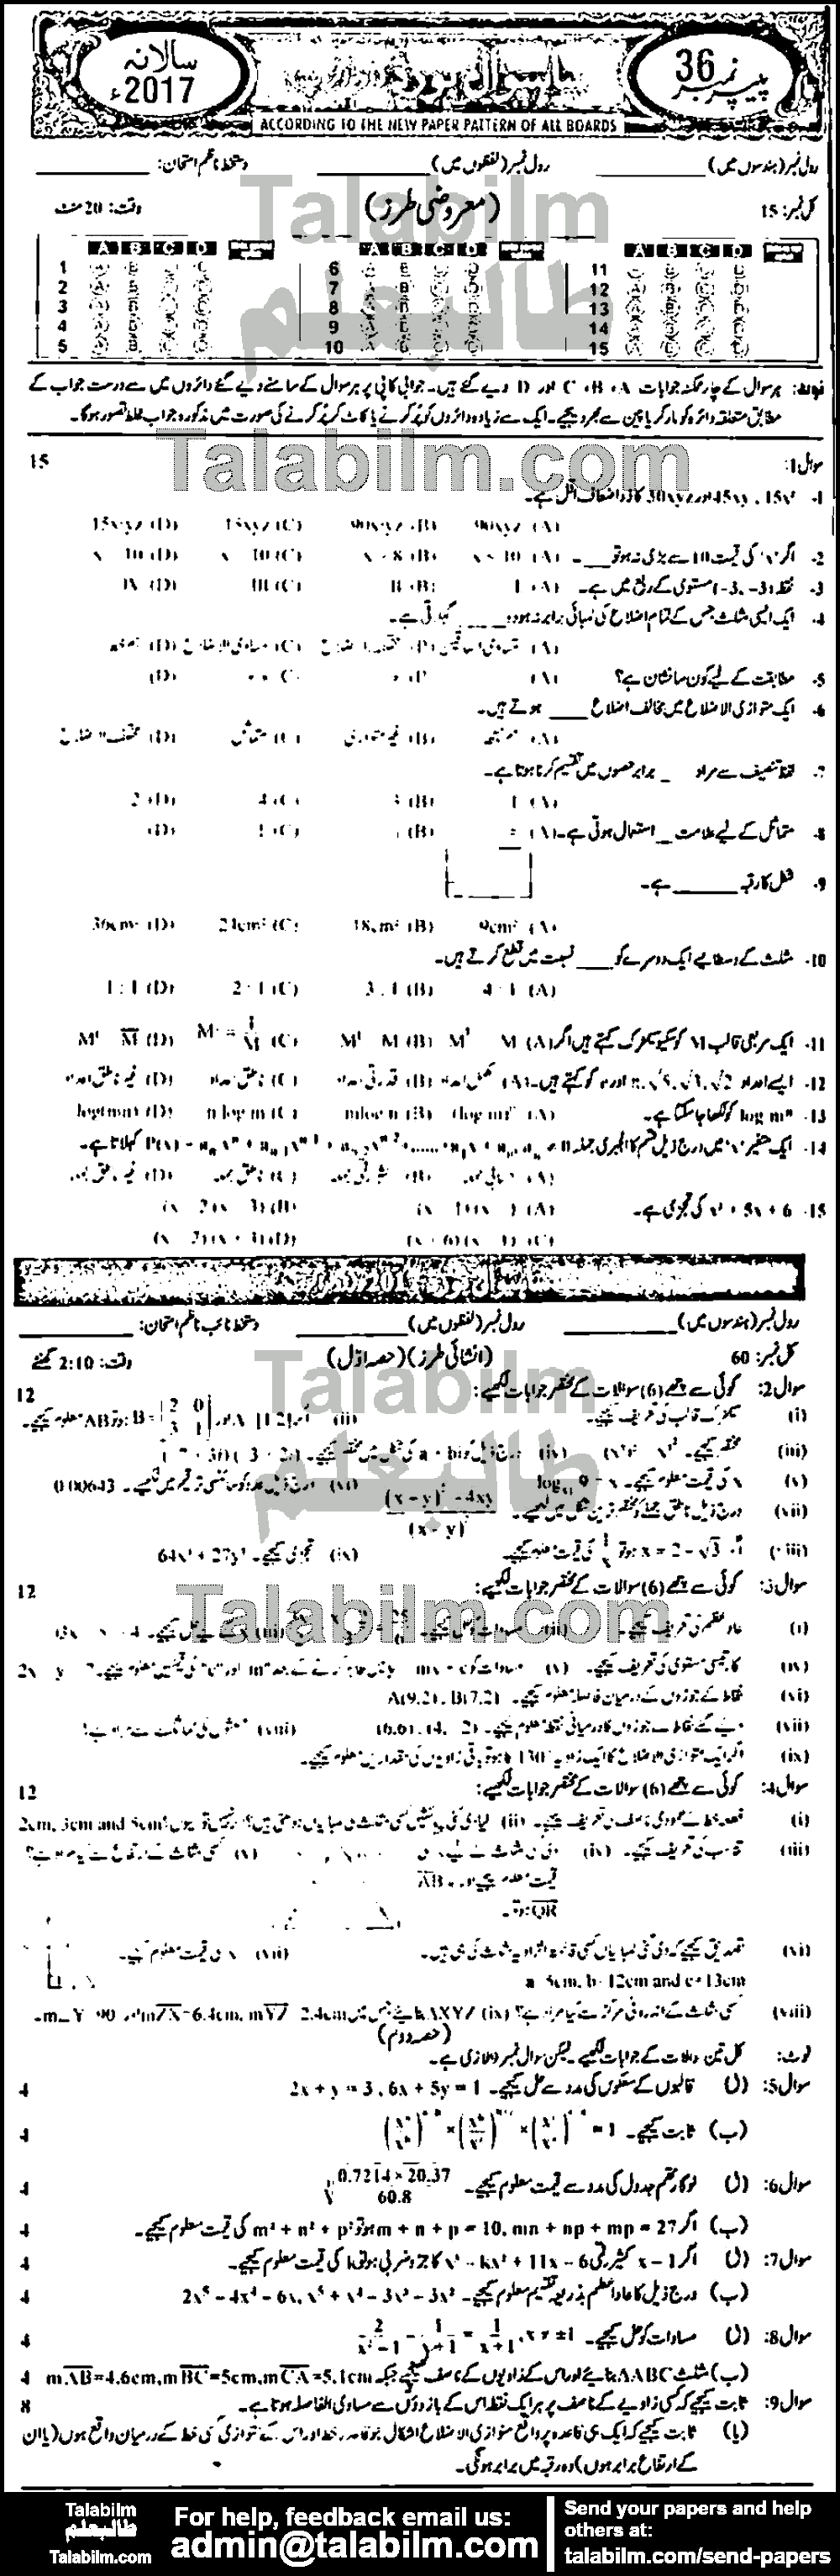 General Math 0 past paper for Urdu Medium 2017 Group-II